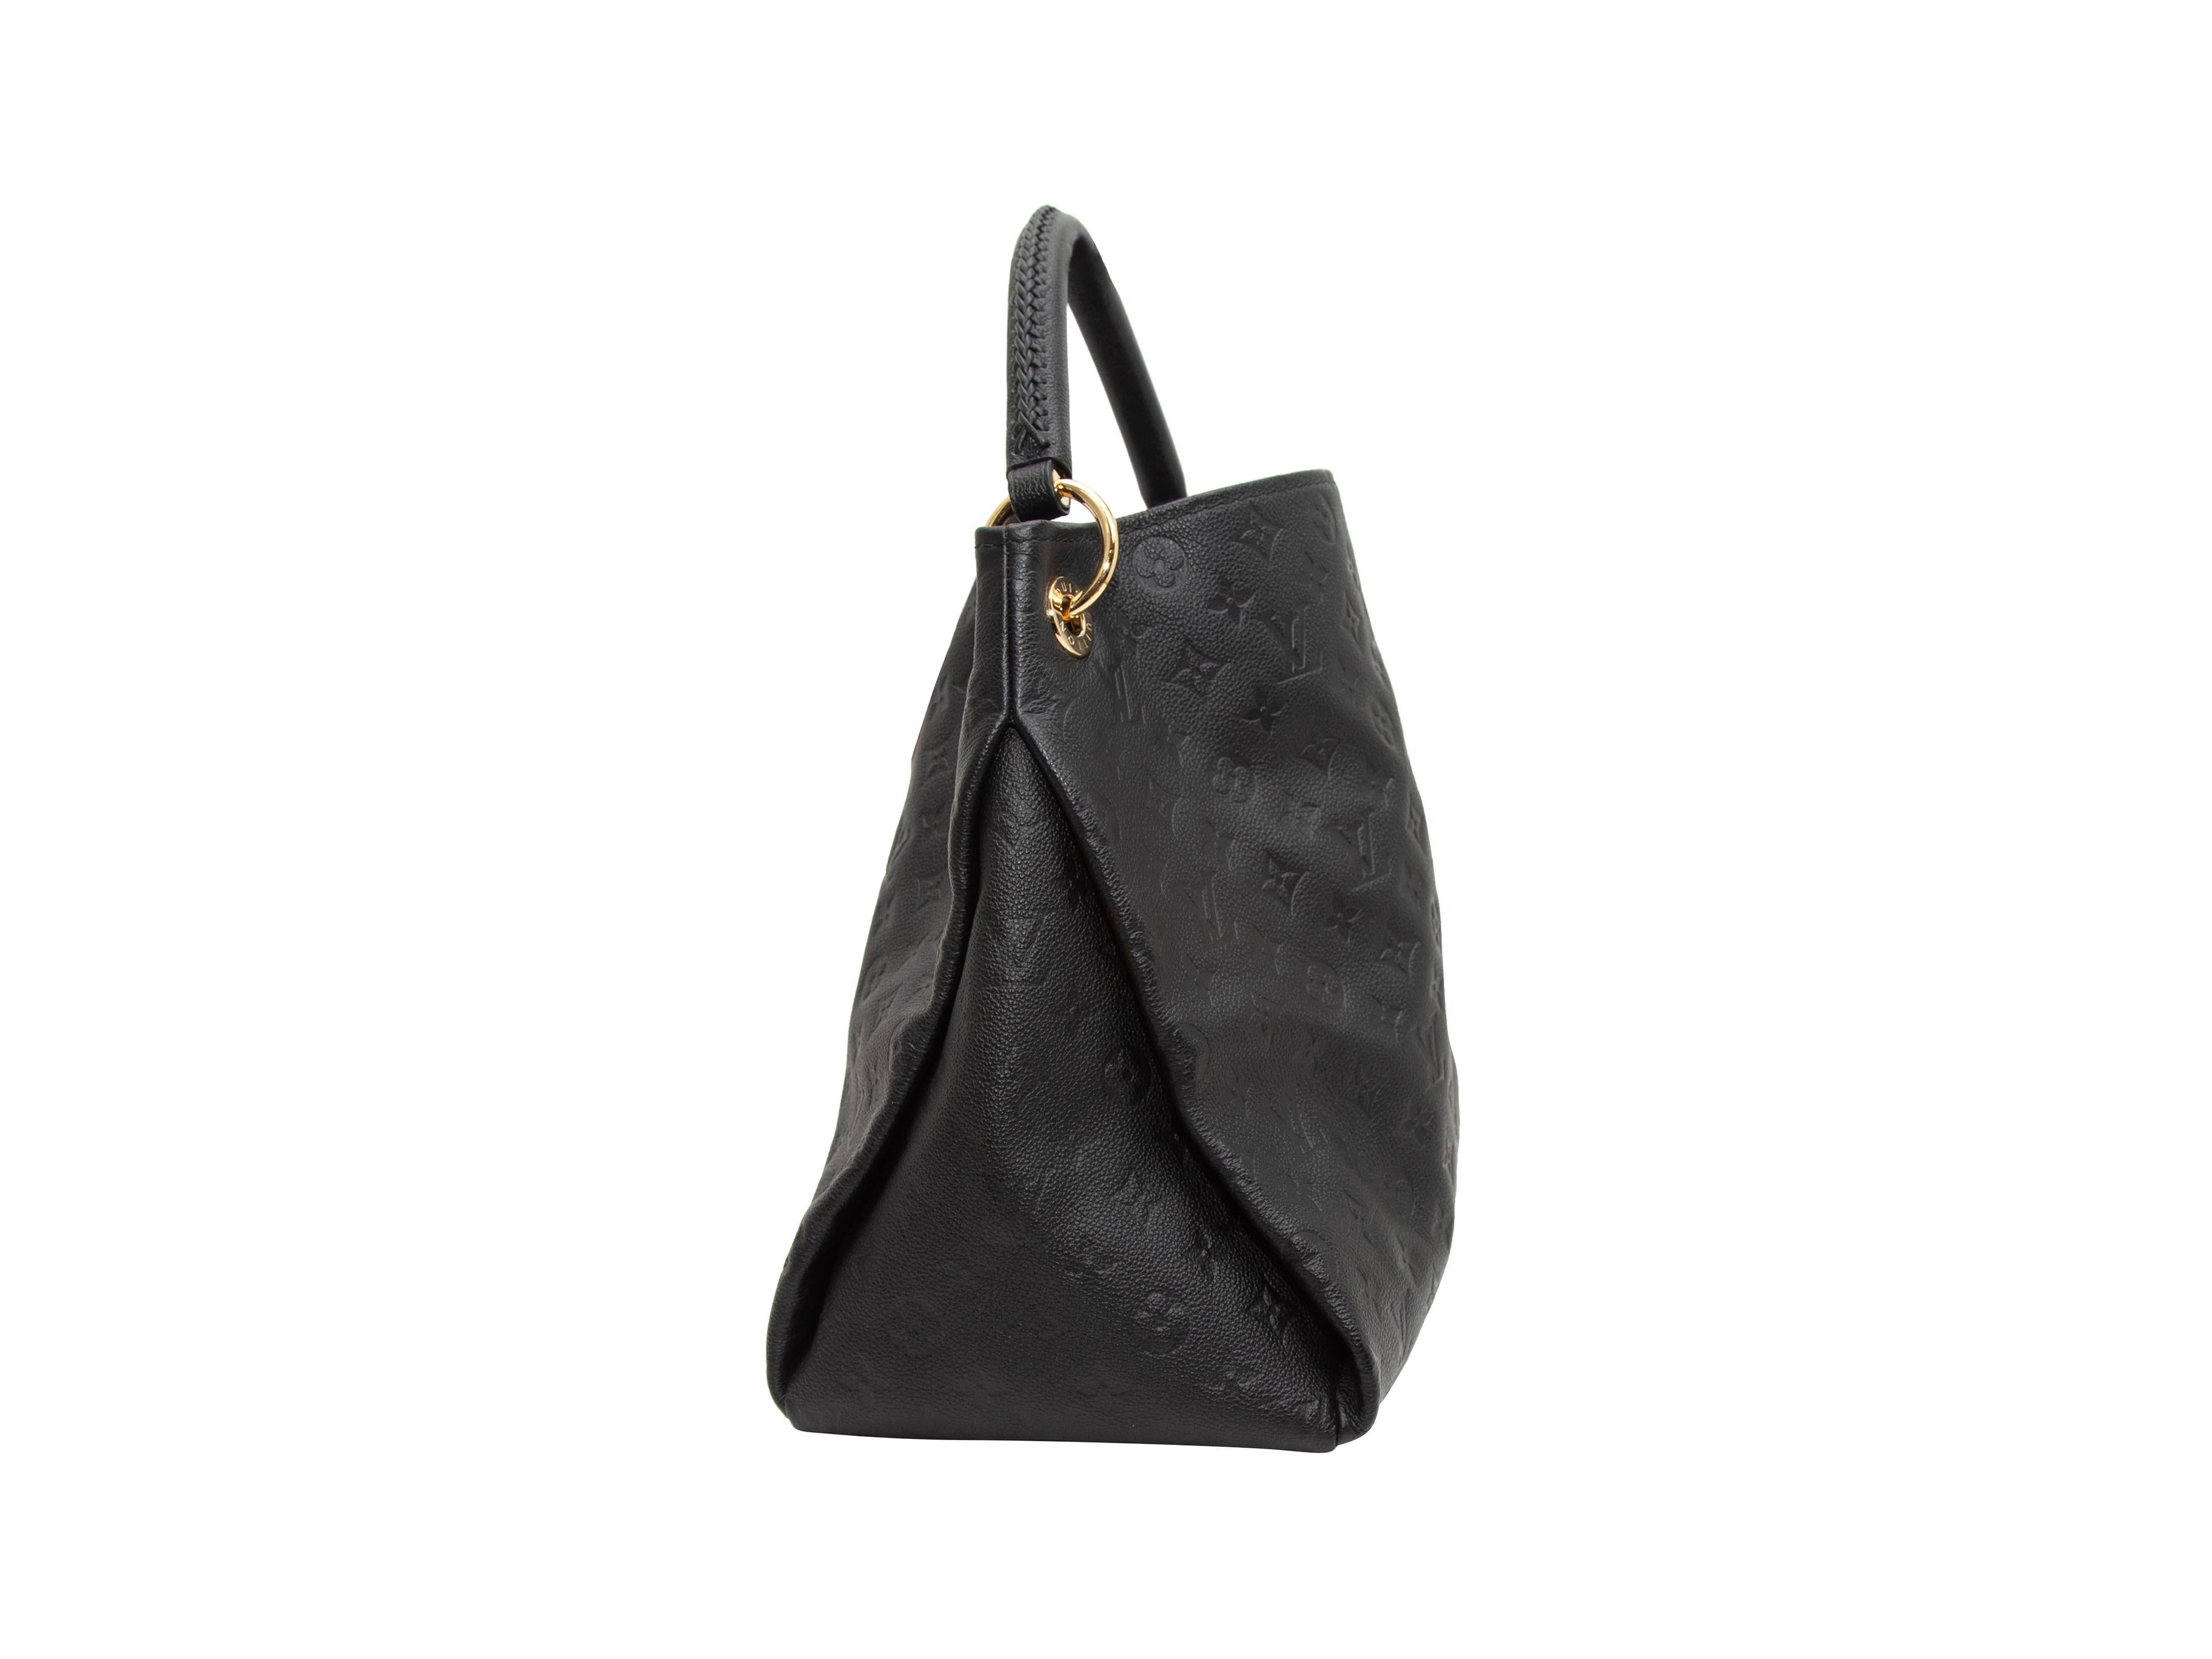 Product details: Black Monogram Empreinte Leather Artsy MM bag by Louis Vuitton. Gold-tone hardware. Single handle strap. 16